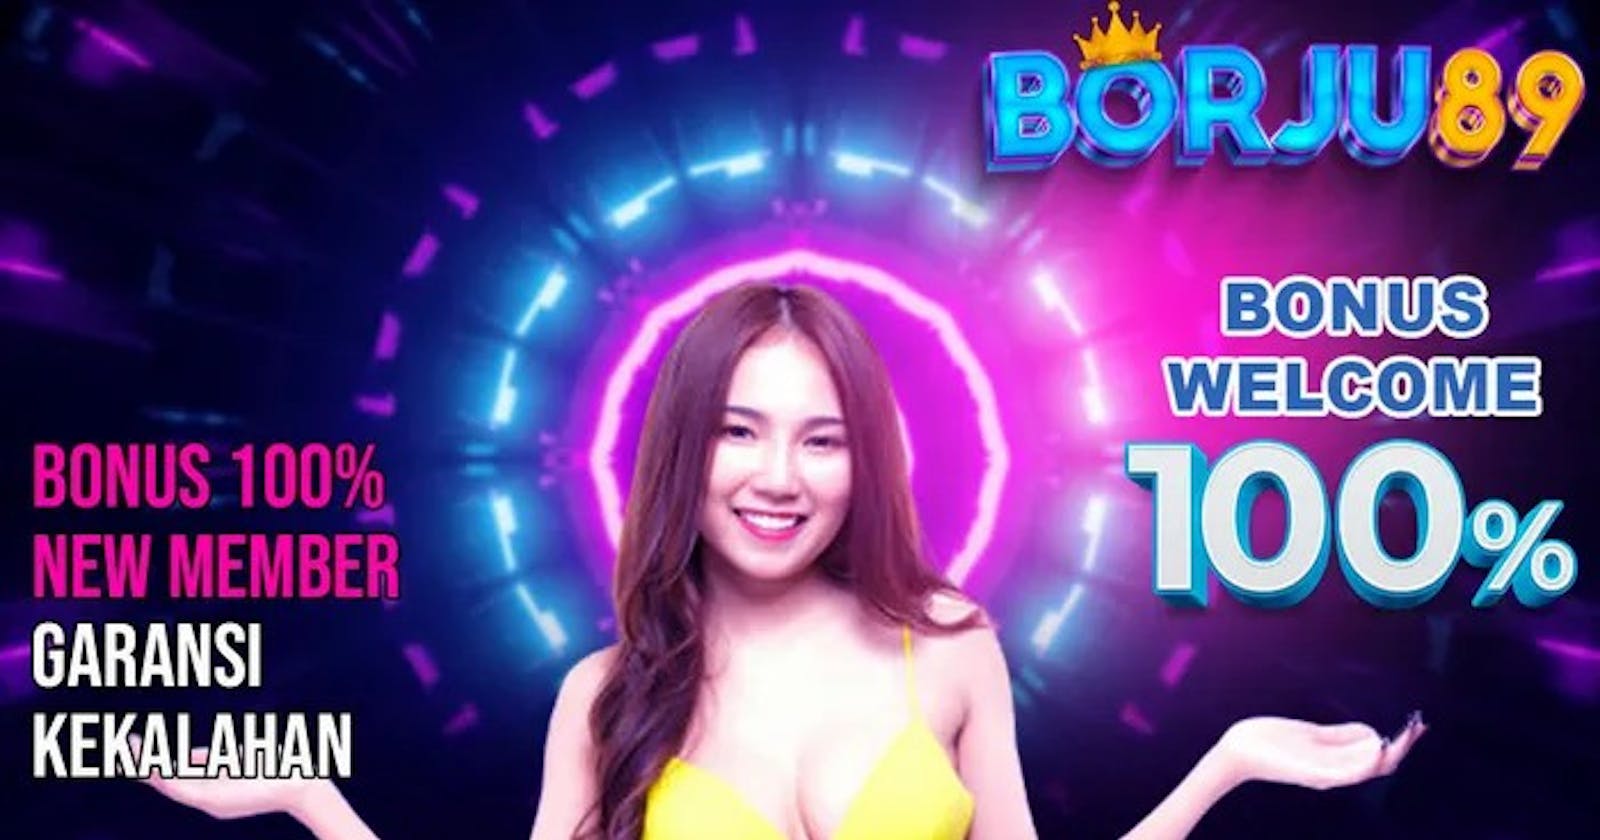 Borju 89 Website Gambling Slot Online Terpercaya Dan Slot Pulsa Gacor Di Indonesia